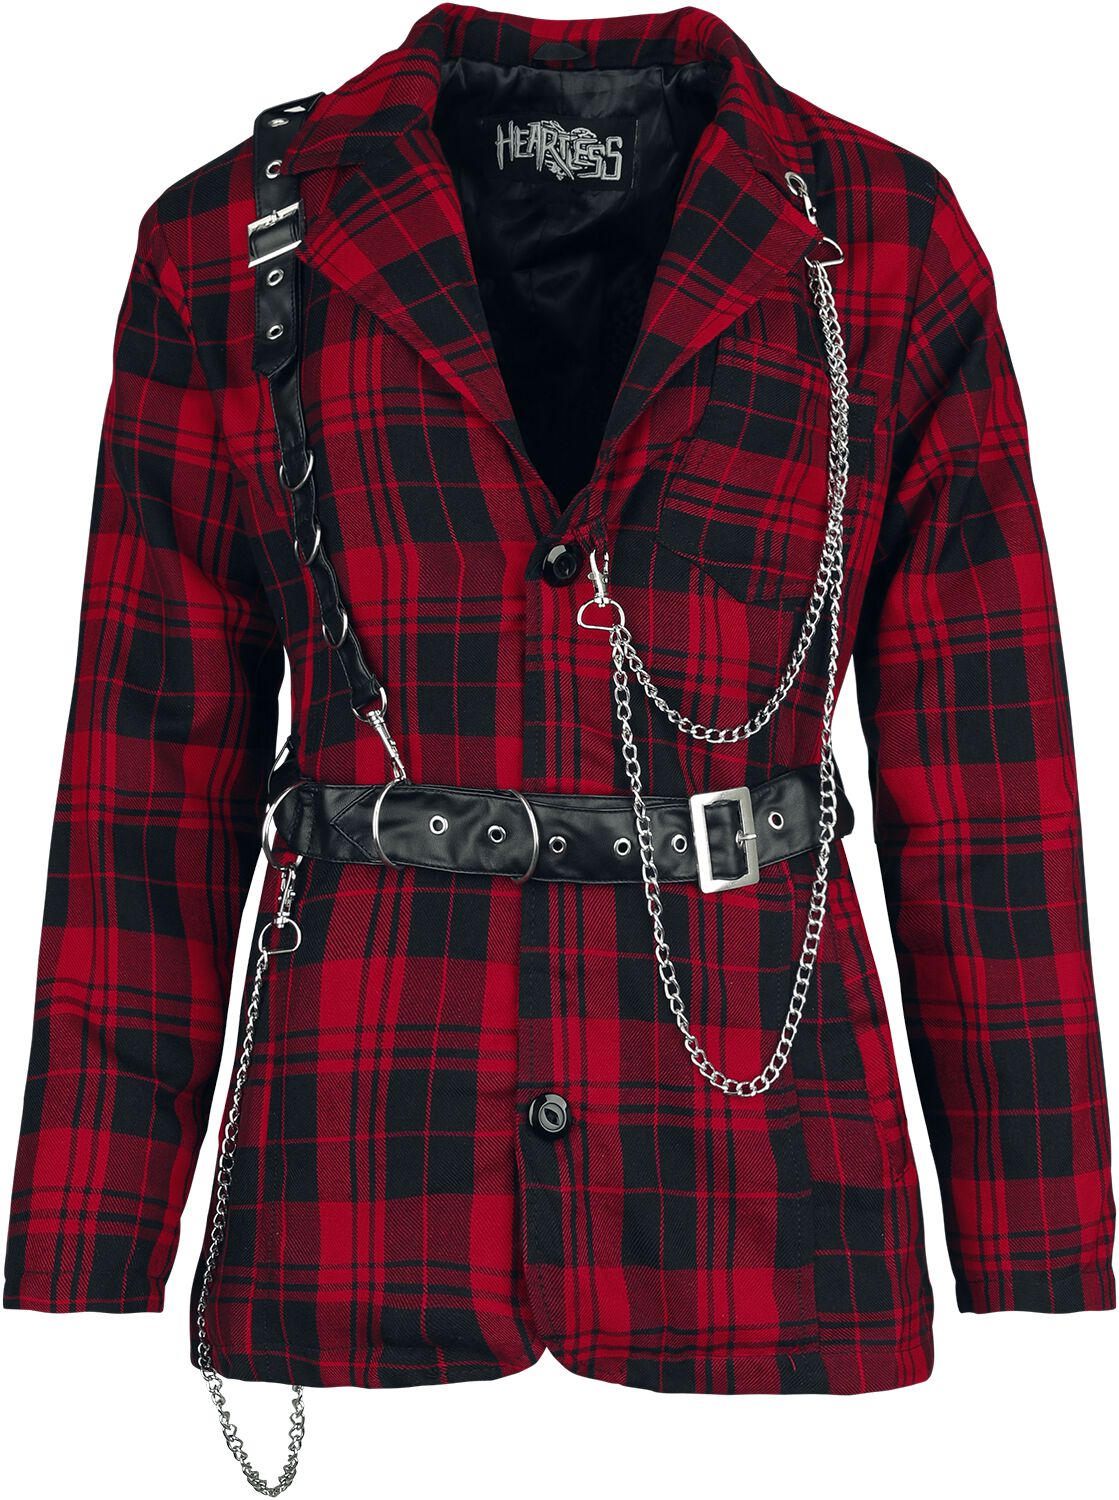 Image of Blazer di Heartless - Devas jacket - S a XL - Donna - rosso/nero